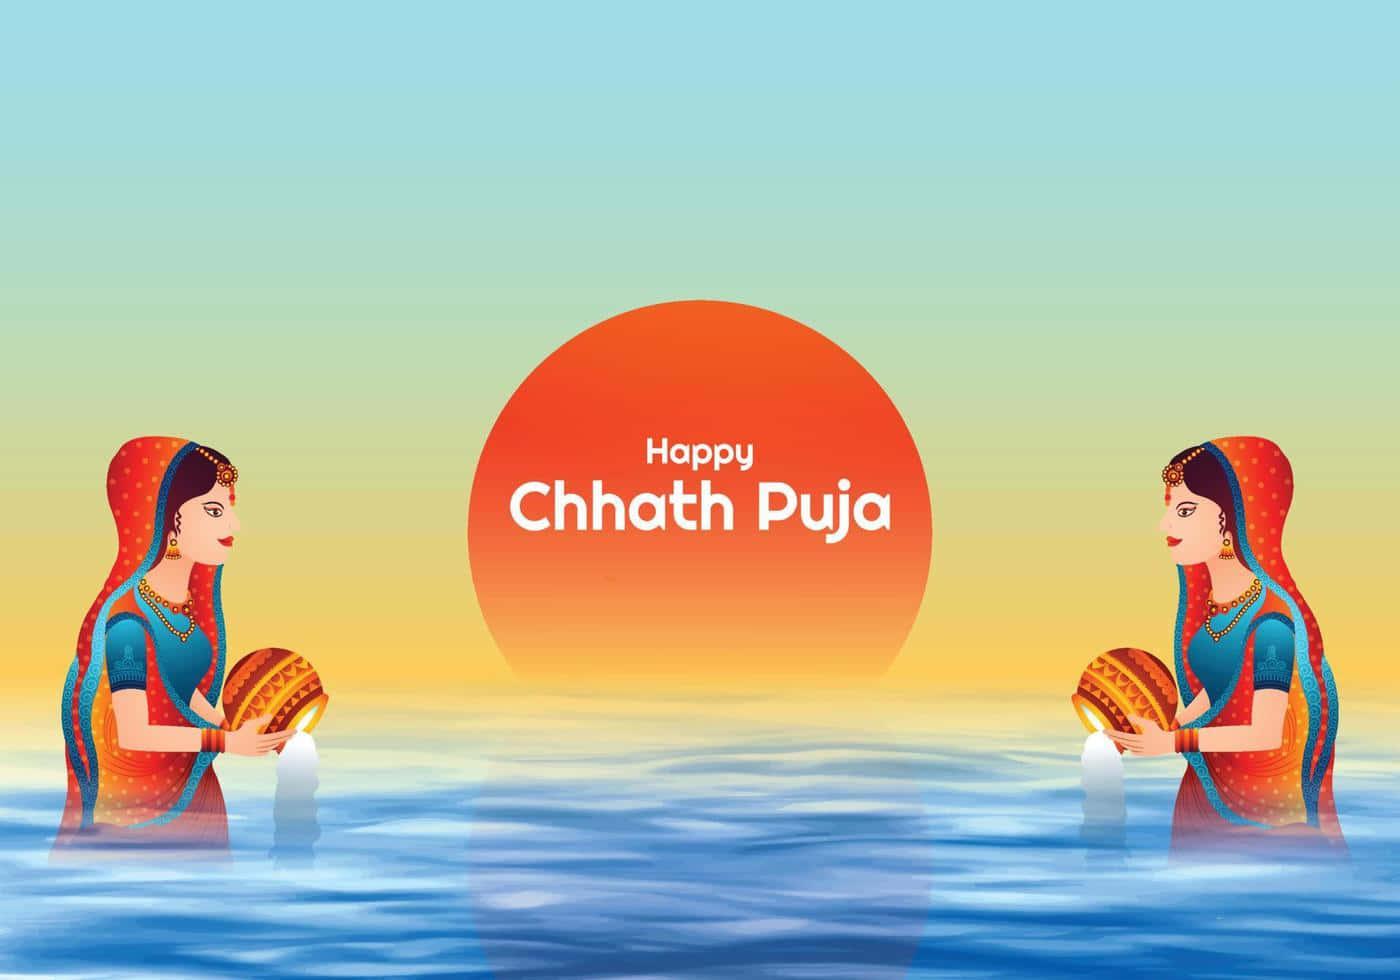 Celebrao Chhath Puja Com Alegria Festiva.